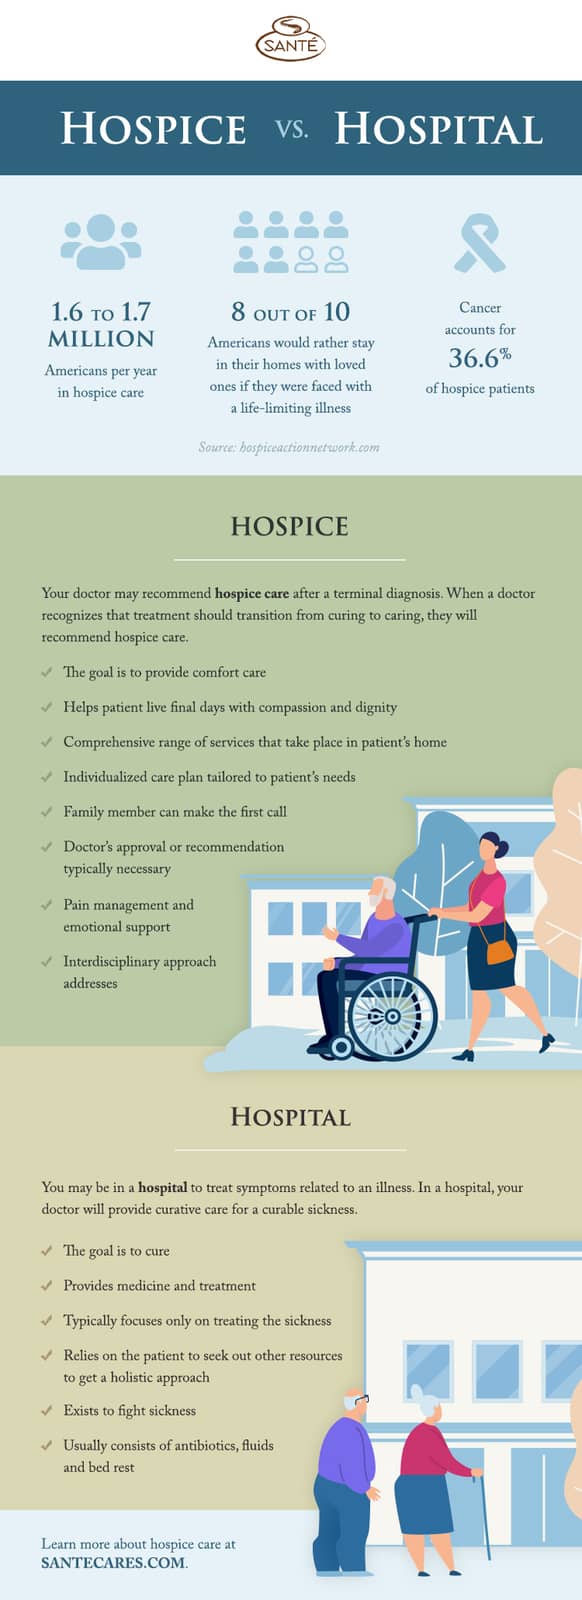 hospice vs. hospital information